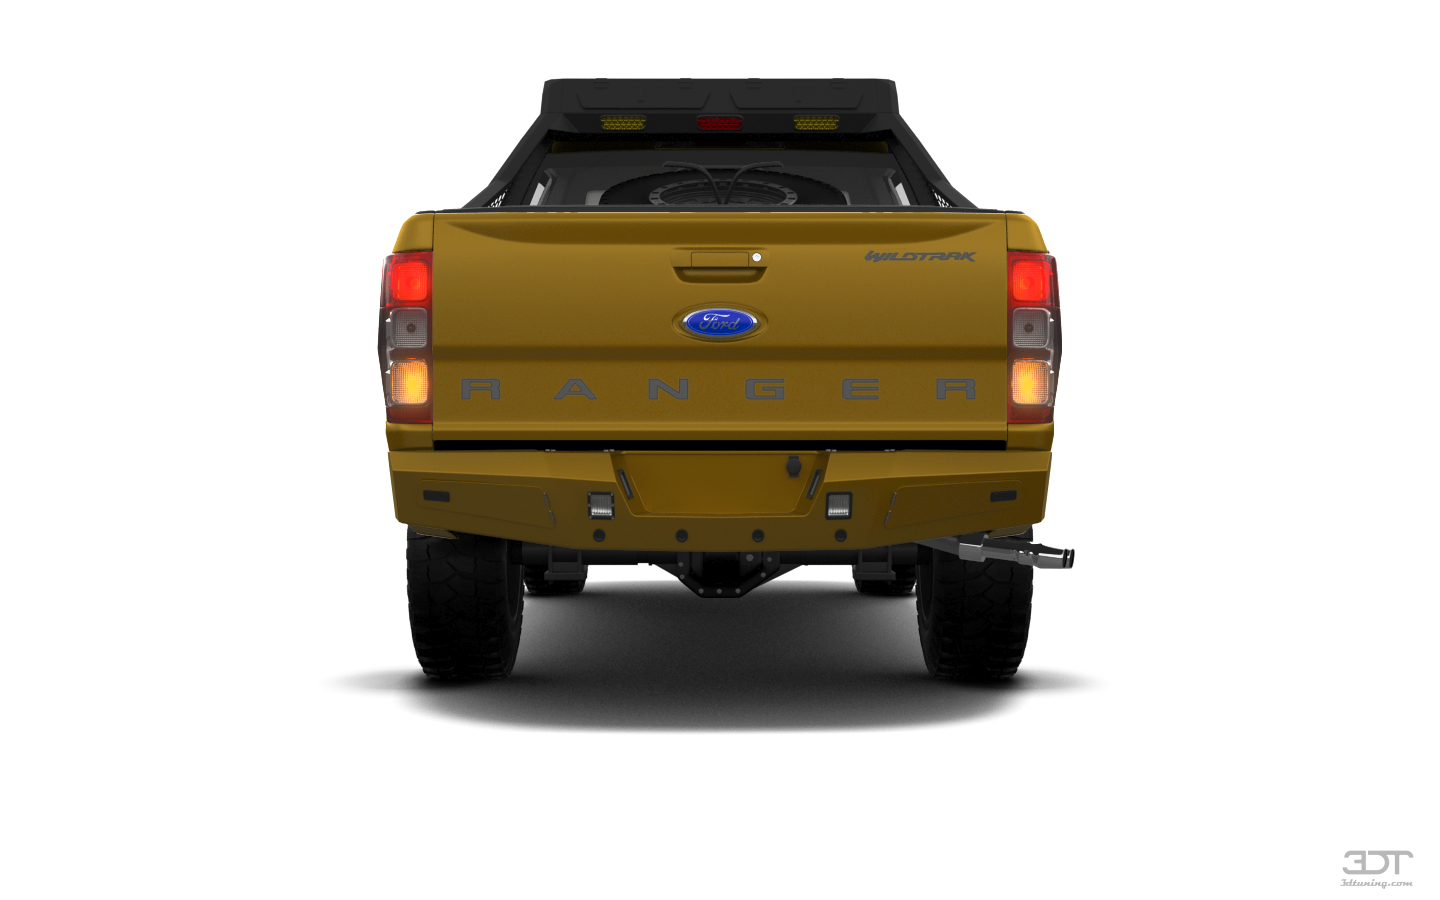 Ford Ranger 4 Door pickup truck 2019 tuning